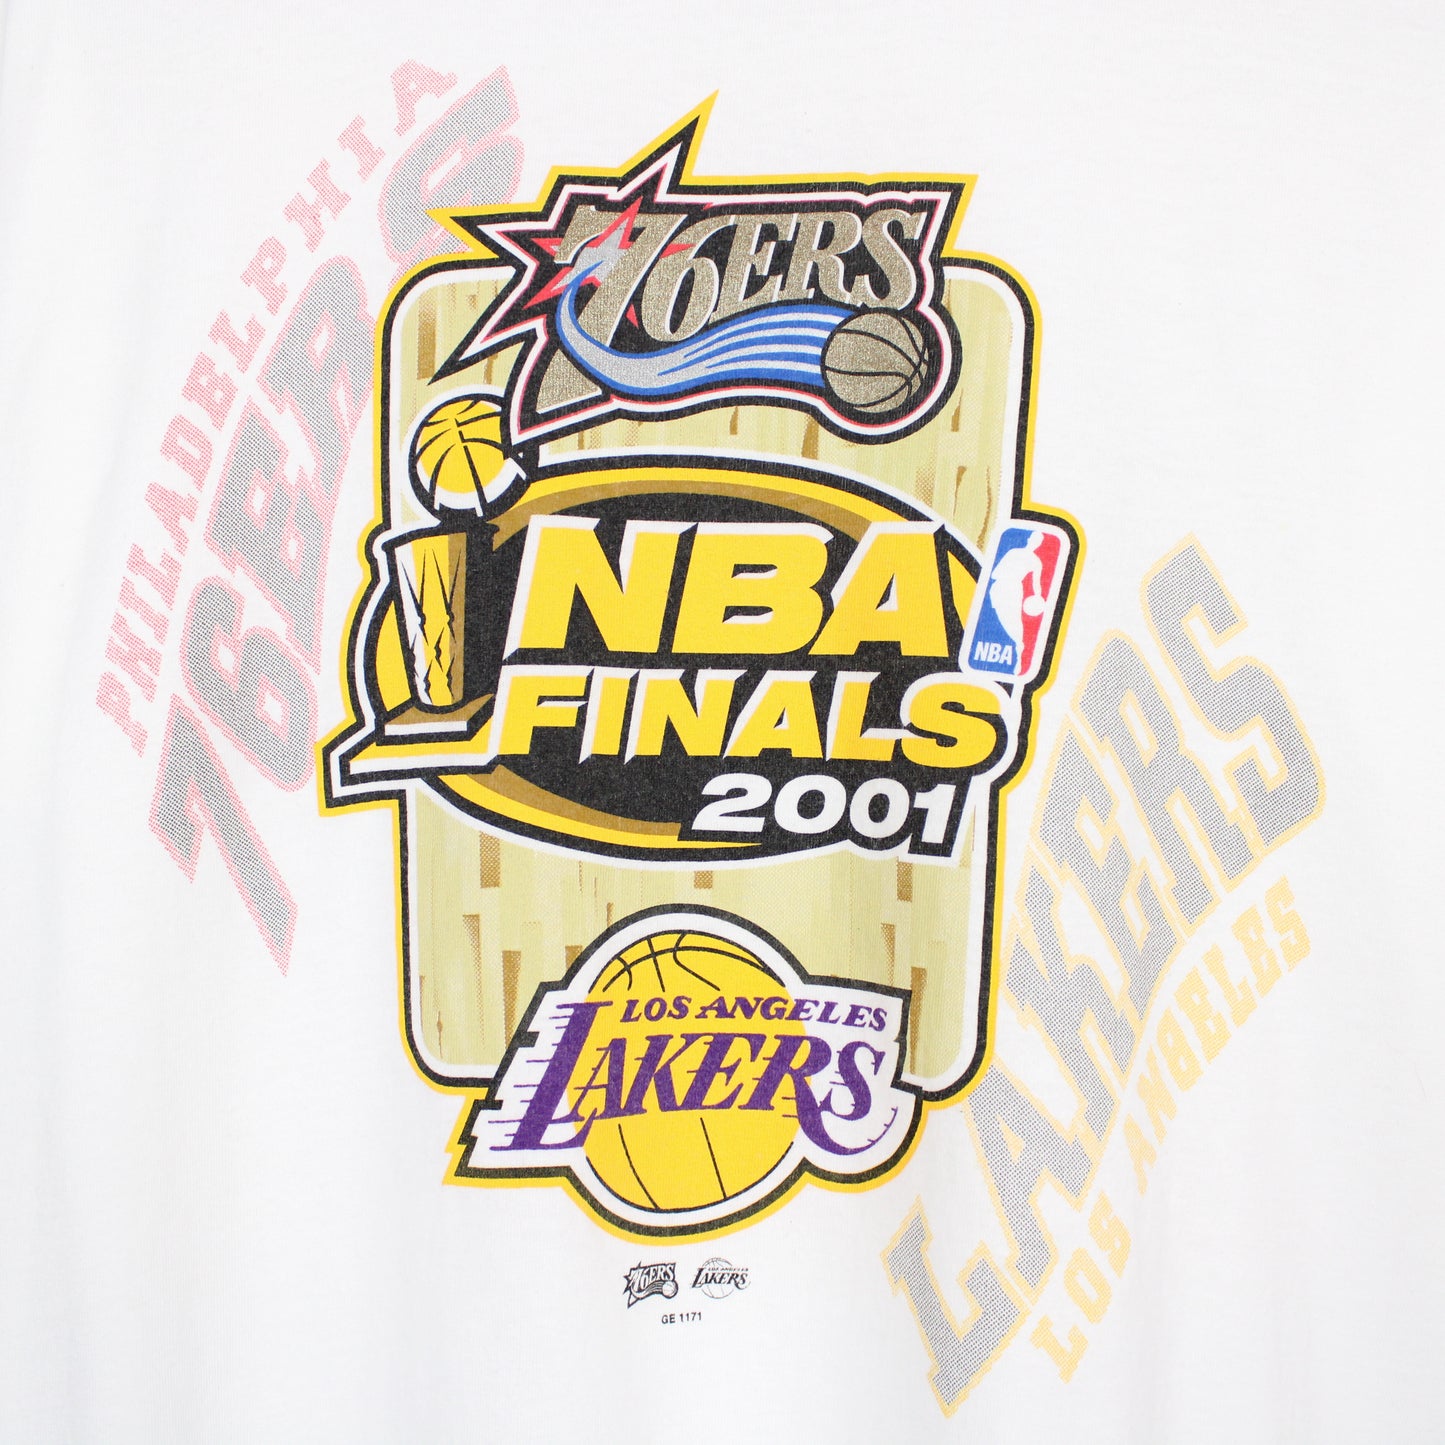 Vintage 2001 Lakers vs Sixers NBA Finals Tee - L